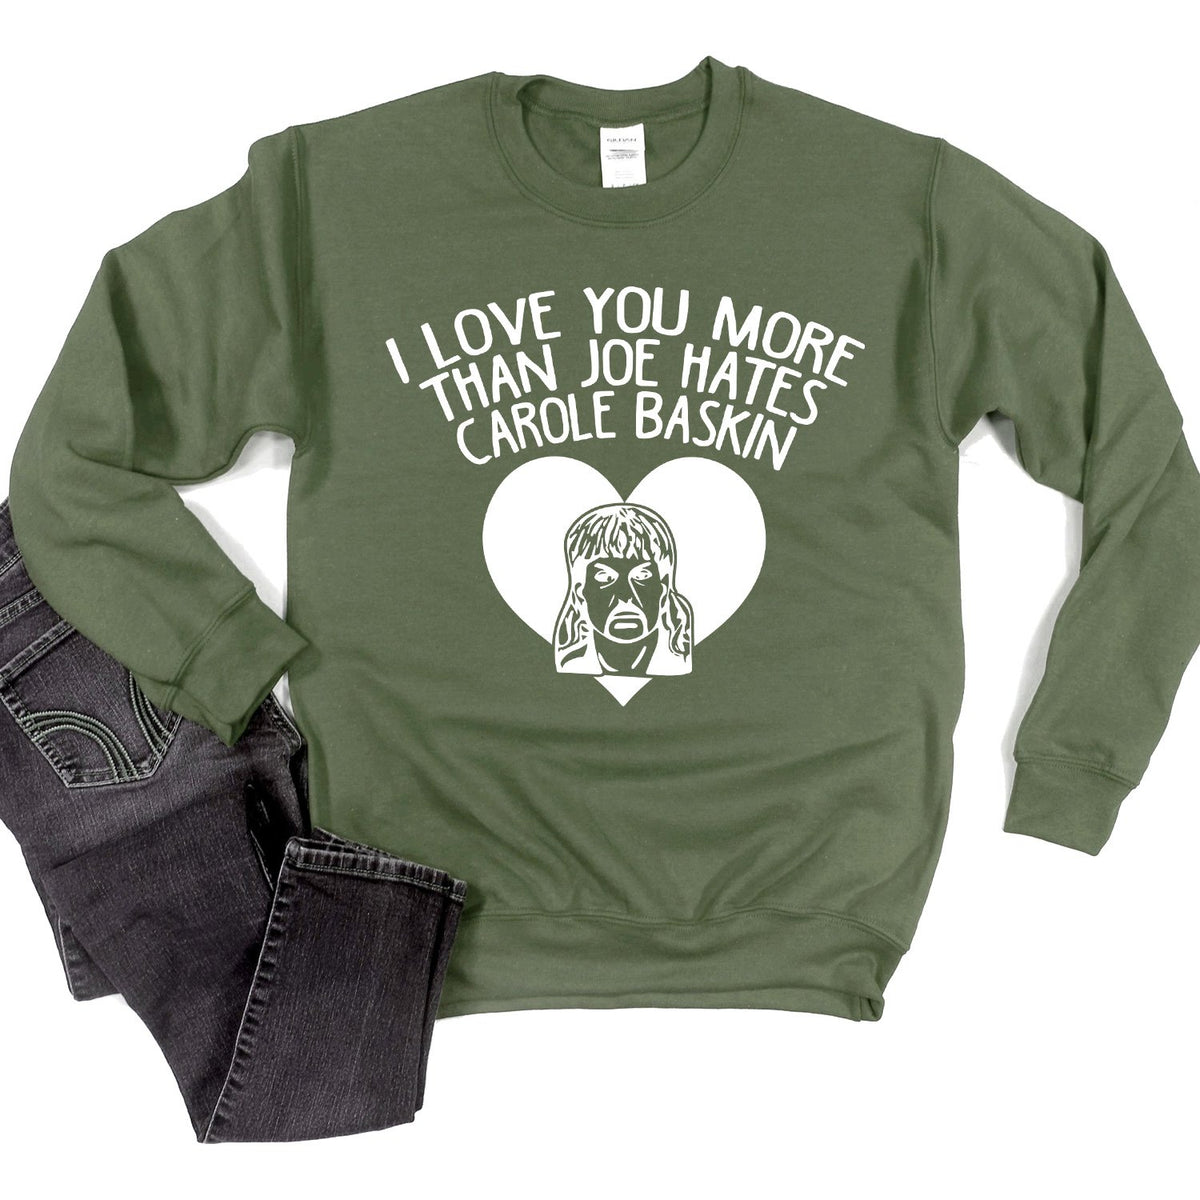 I Love You More Than Joe Hates Carole Baskin - Long Sleeve Heavy Crewneck Sweatshirt